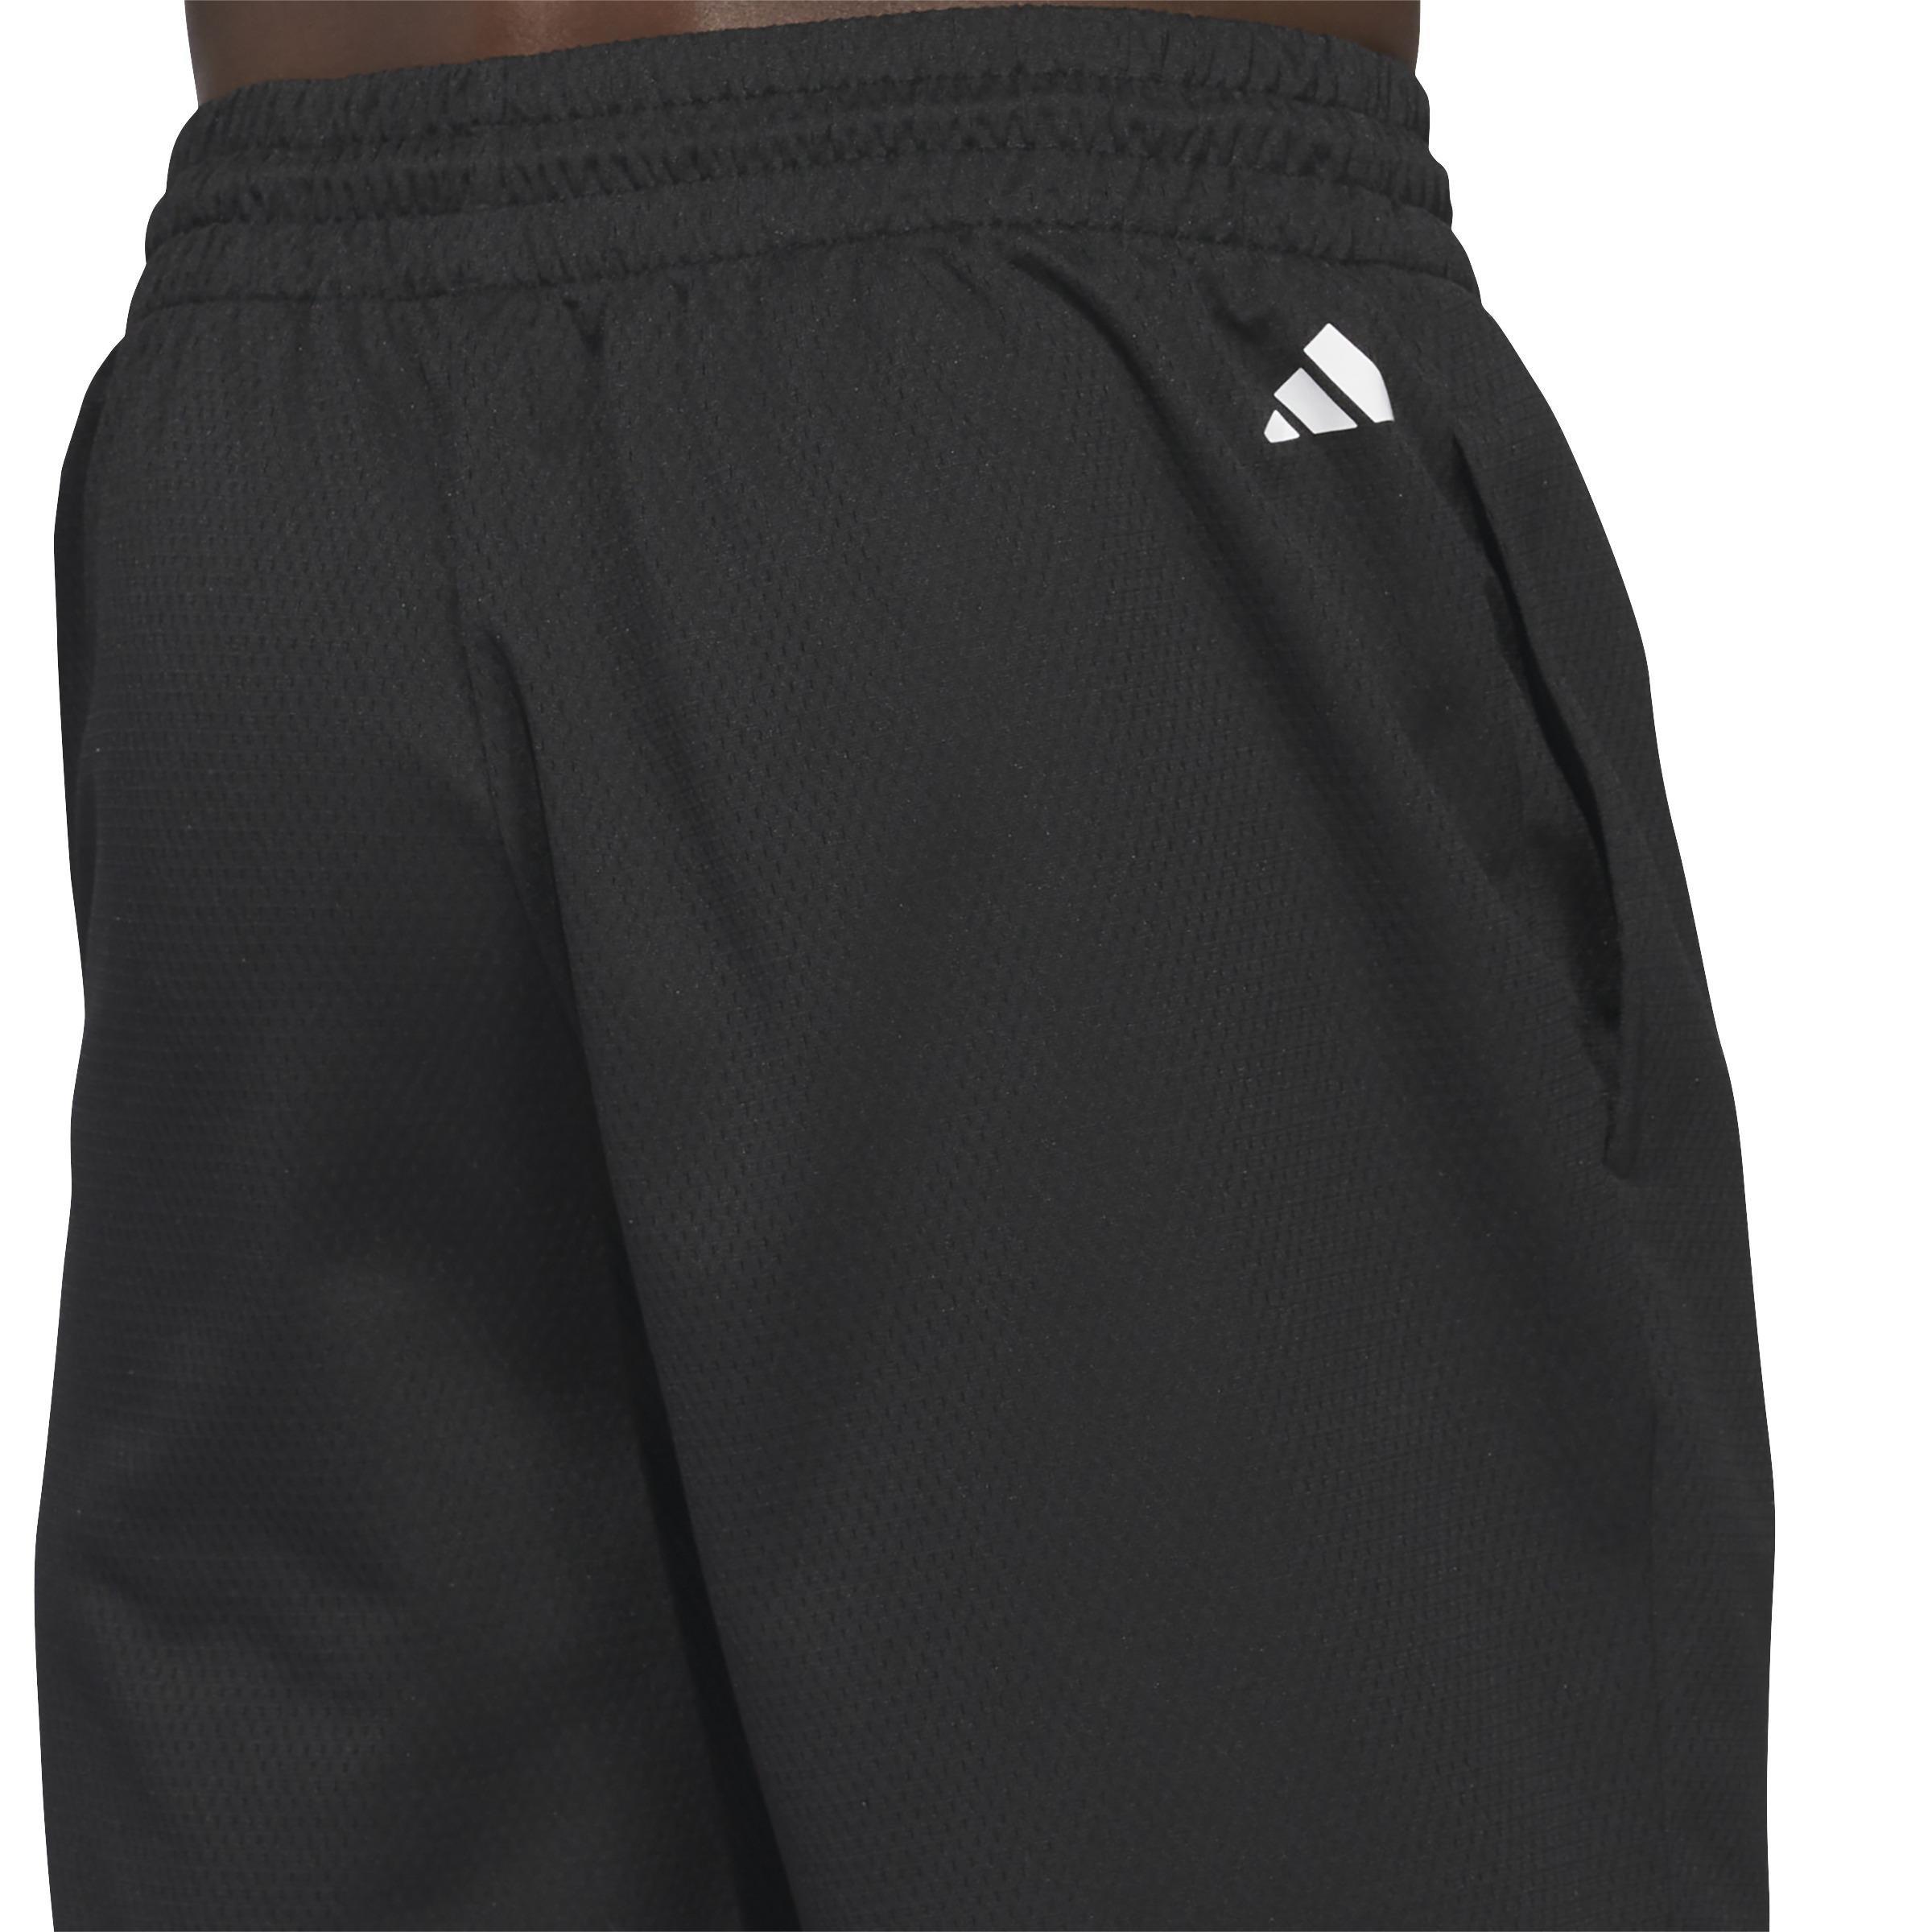 adidas - Men Adidas Legends Shorts, Black